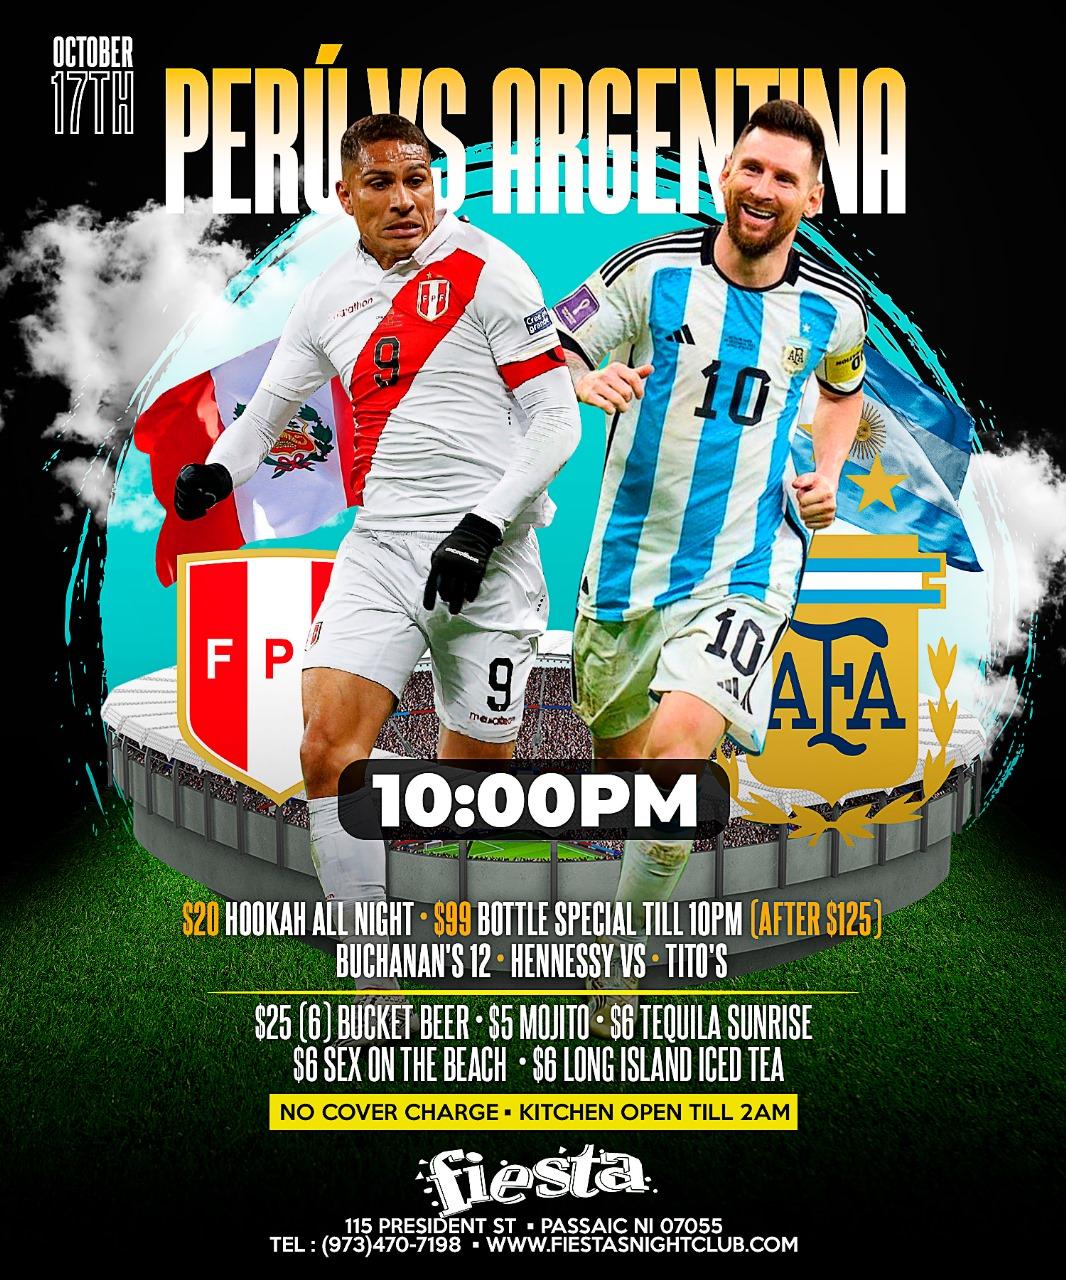 PERU VS ARGENTINA Tickets ExpressTix